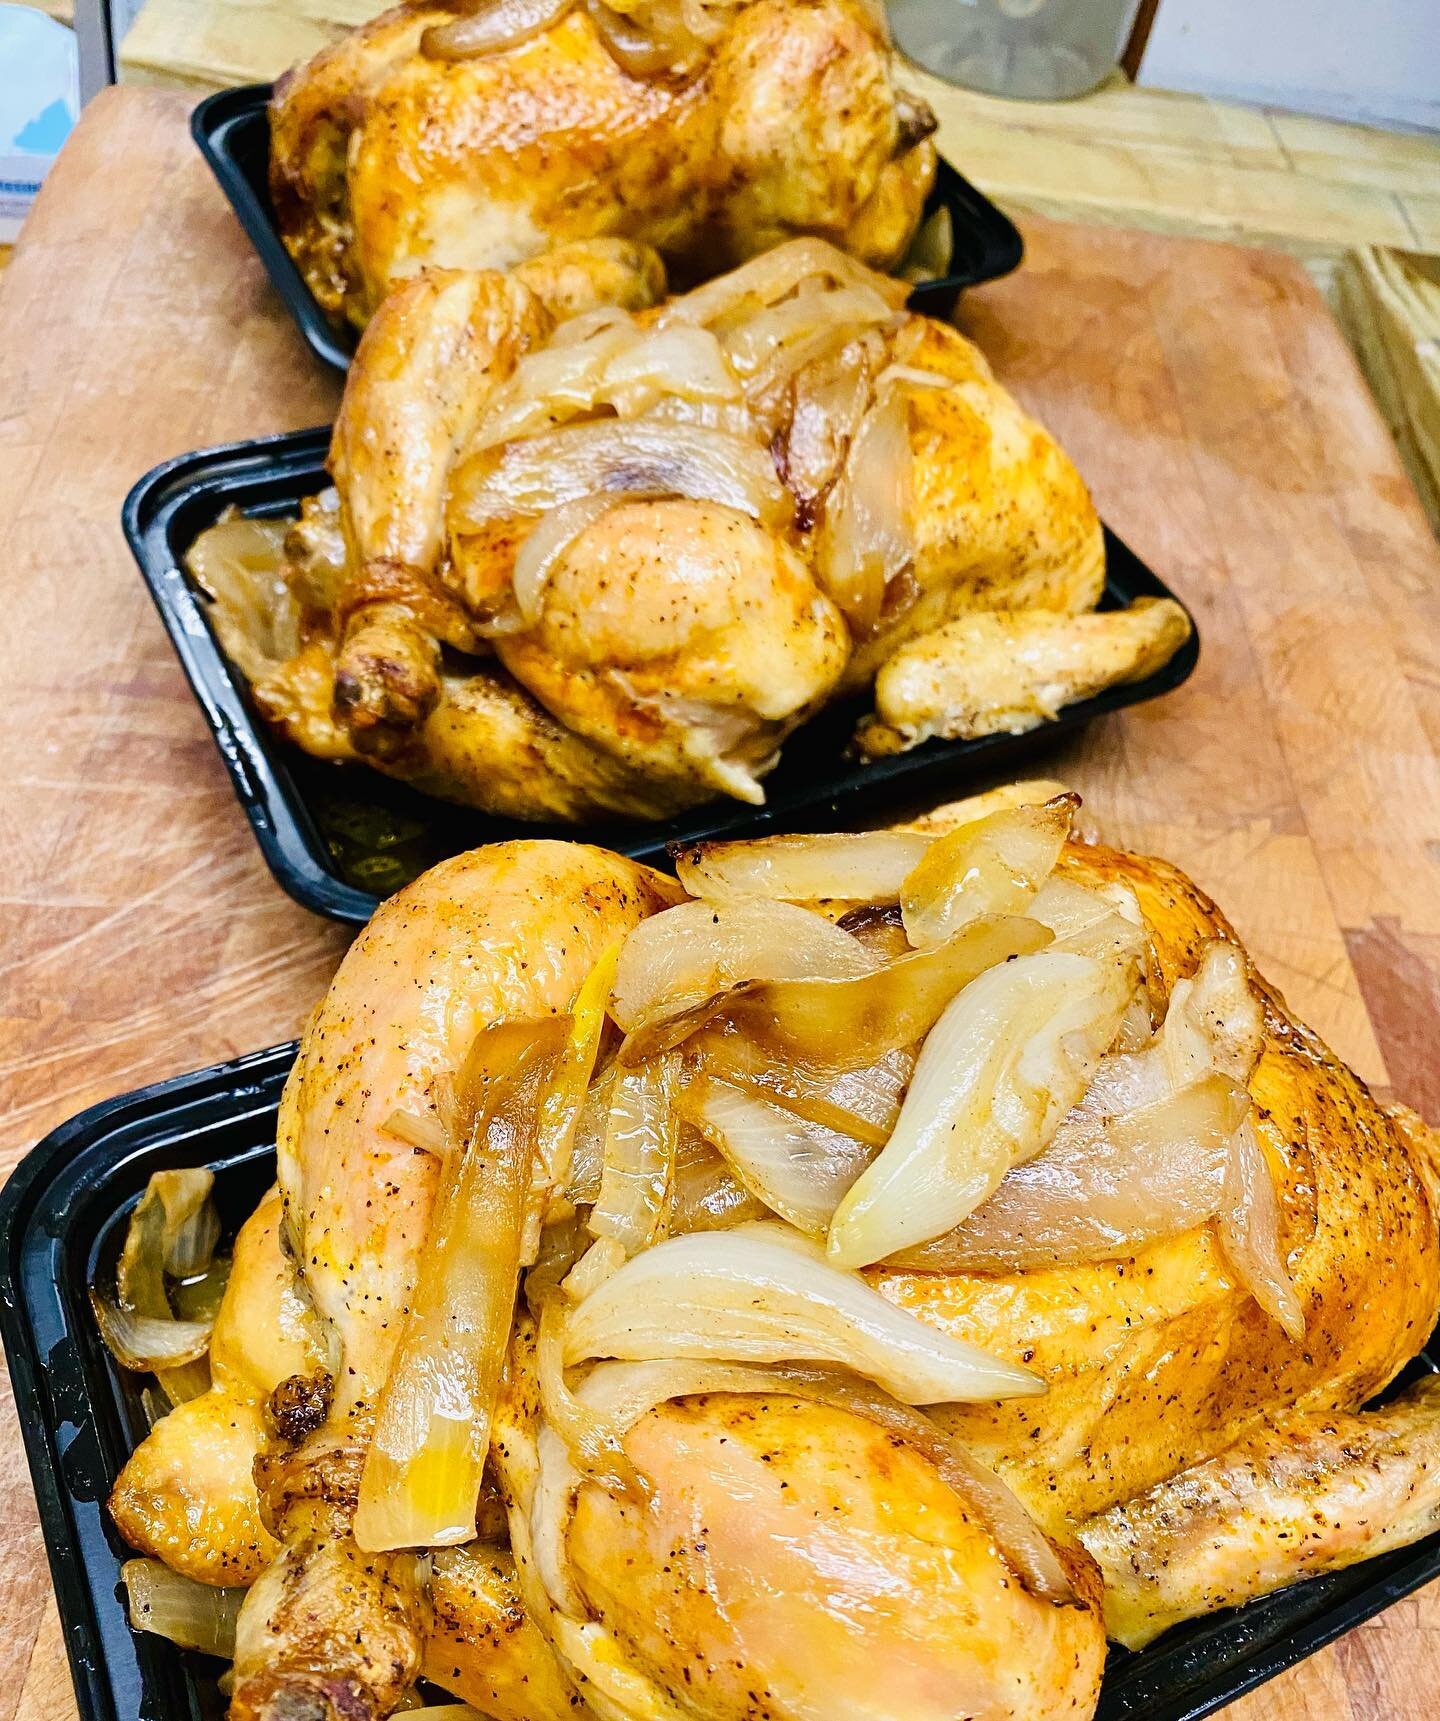 Cooked Daily, Roasted Whole Chicken 🍗! 

.
.
.
#ottomanelli #ues #lunchspecial #chicken #roastedchicken #roastchicken #roast #butcher #butchershop #oldfashioned #nycbutcher #butchersofinstagram #butcherlife #homestylecooking #familyrecipe #smallbusi